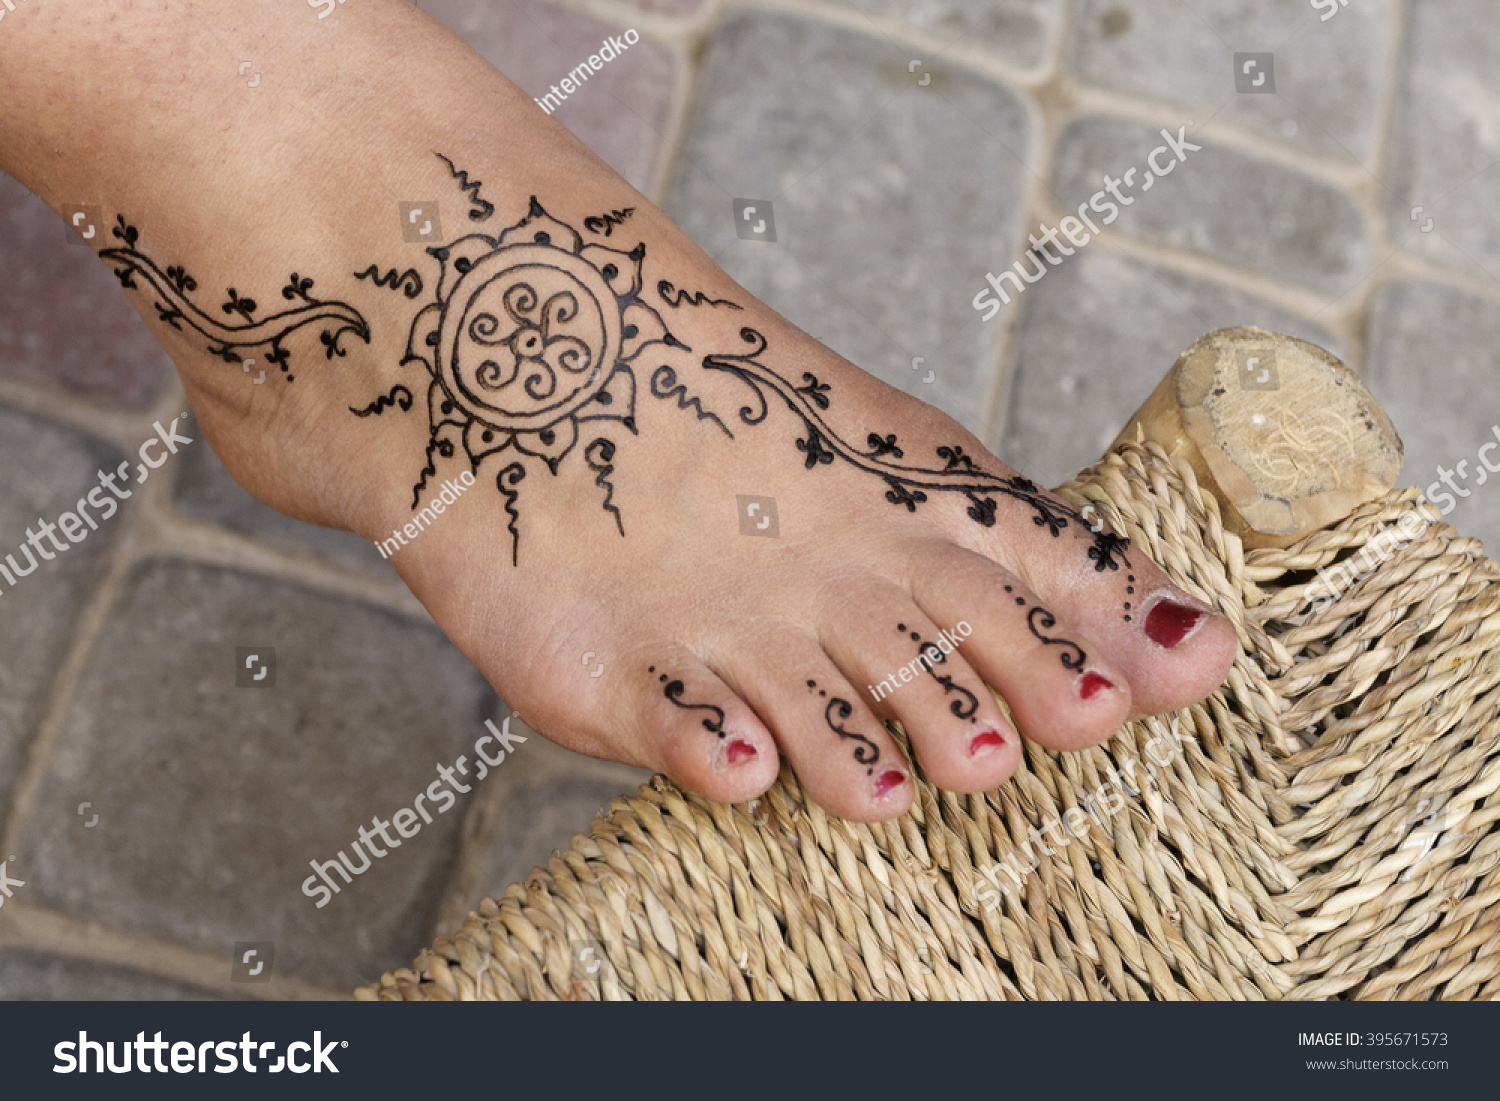 Henna Tattoo Foot / Aupoman Hk Henna Tattoo Foot 16 Henna Tattoo By Aupoman In Flickr : Henna tattoo foot henna mehndi foot tattoos mehendi hand henna mehandi designs for kids latest mehndi designs simple mehndi designs beautiful henna designs.